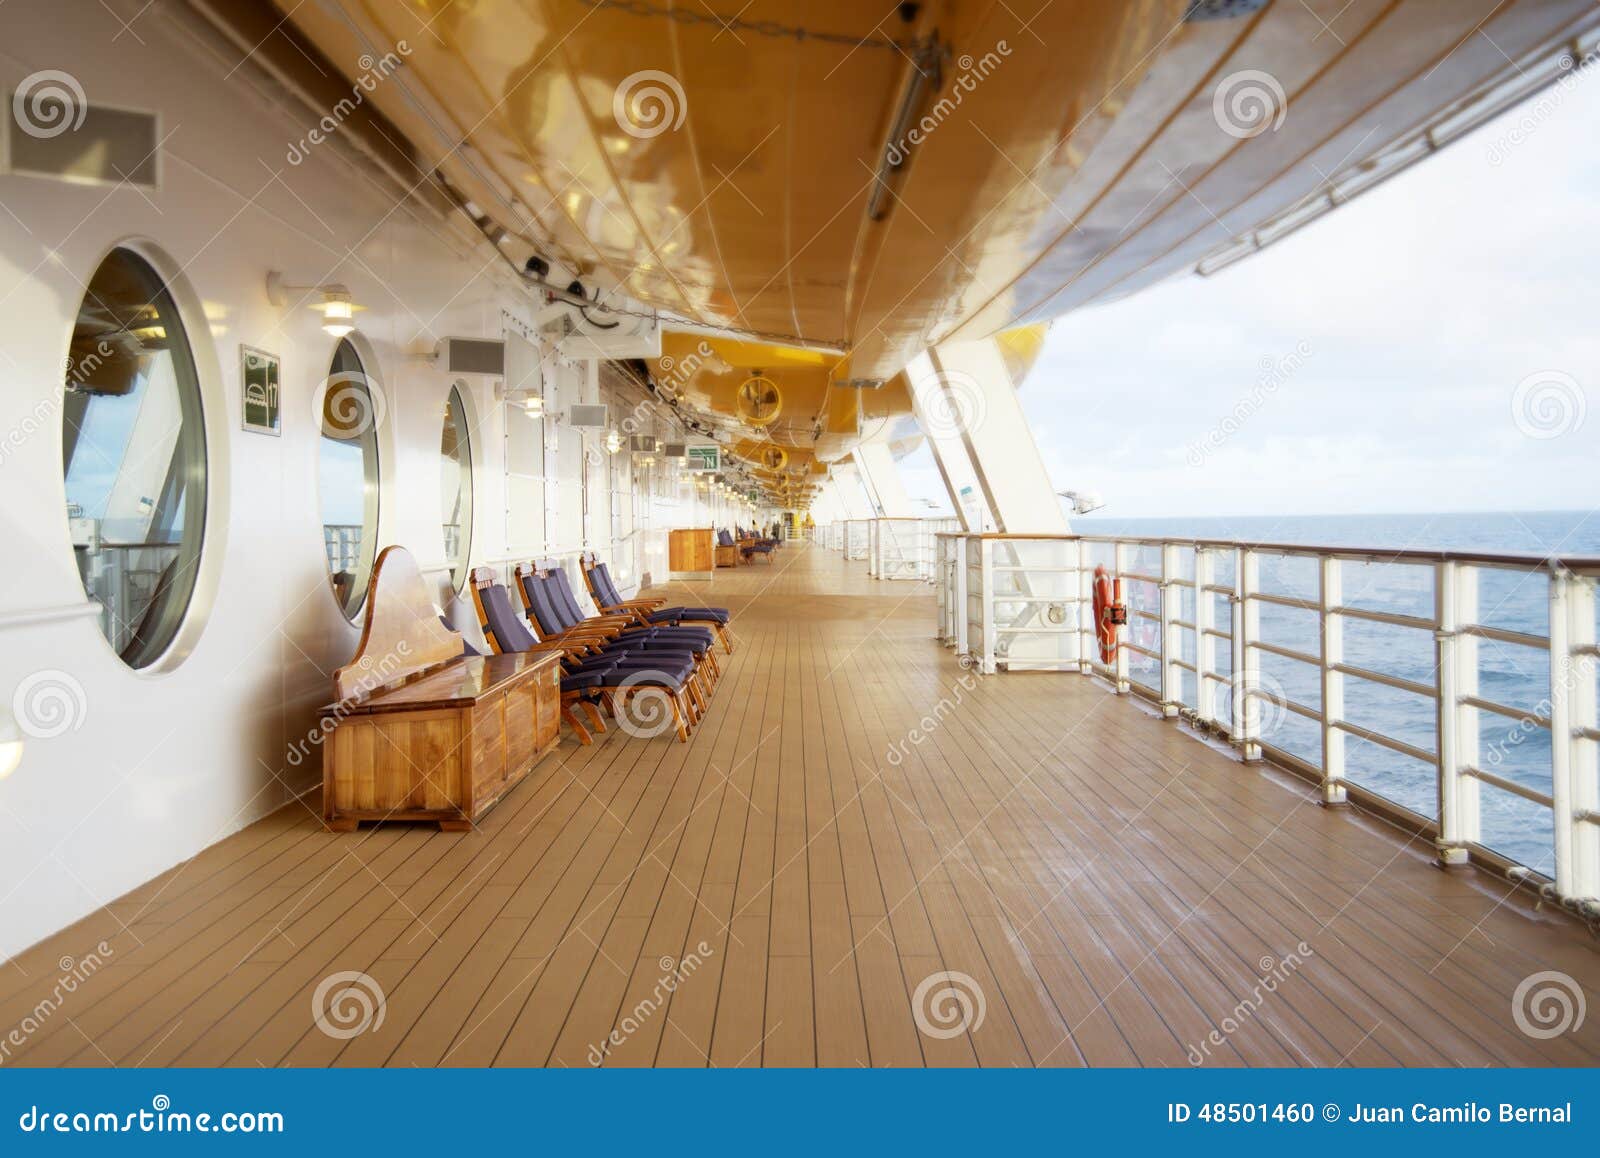 deck-chairs-cruise-ship-circular-windows-back-48501460